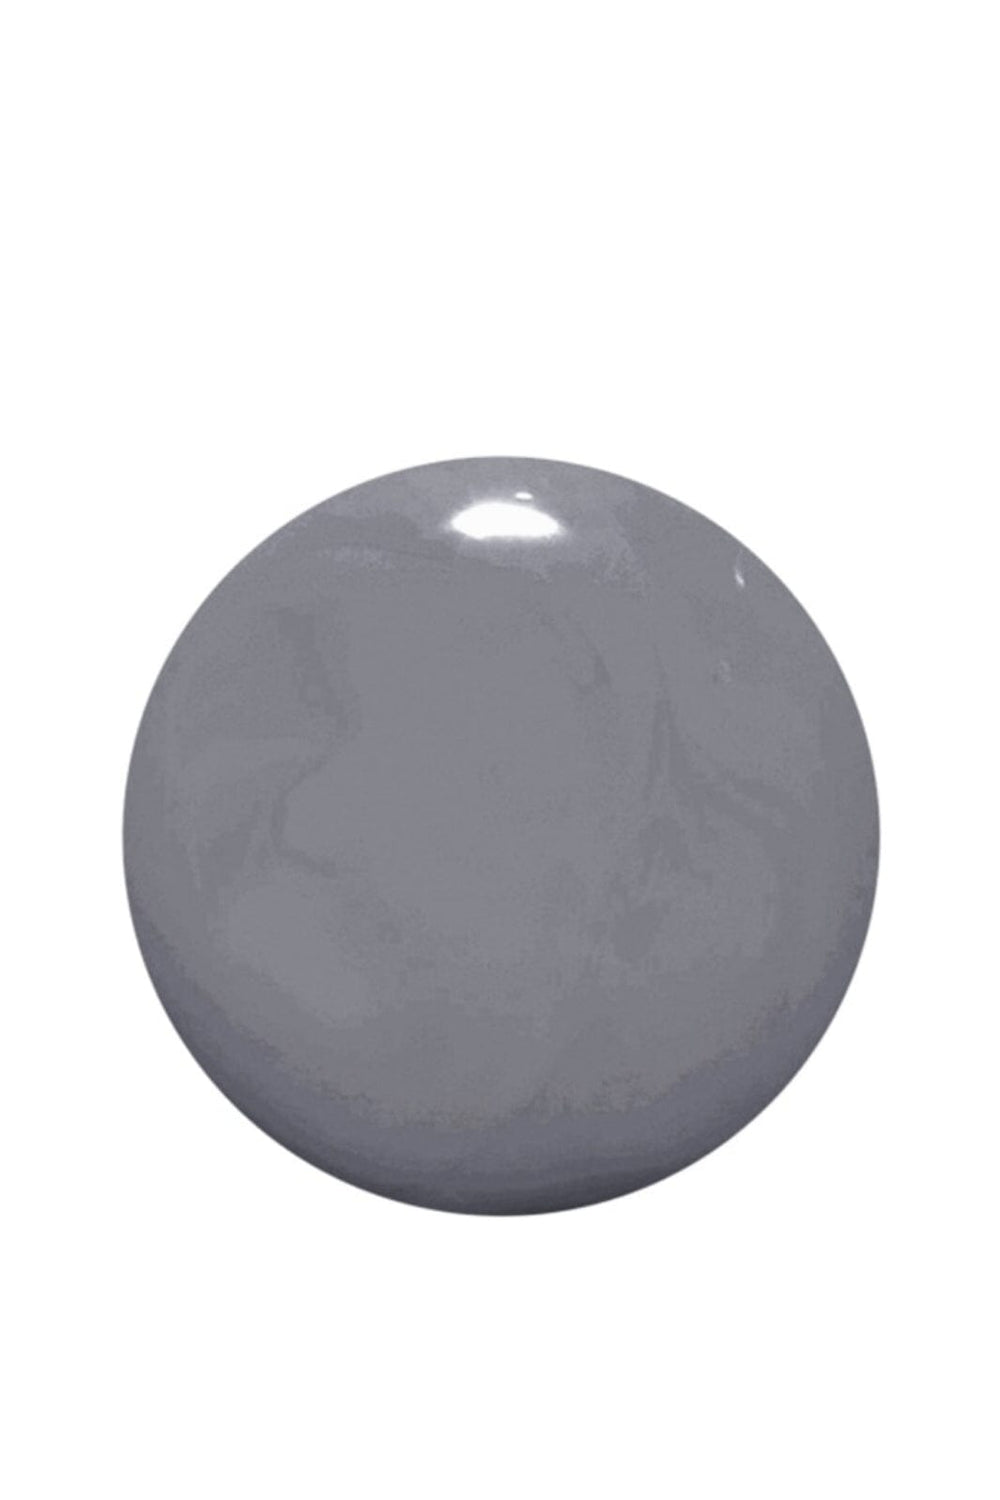 Nailberry - NAILBERRY Stone 15 ml - Oxygenated Classic Dark Grey Neglelak 